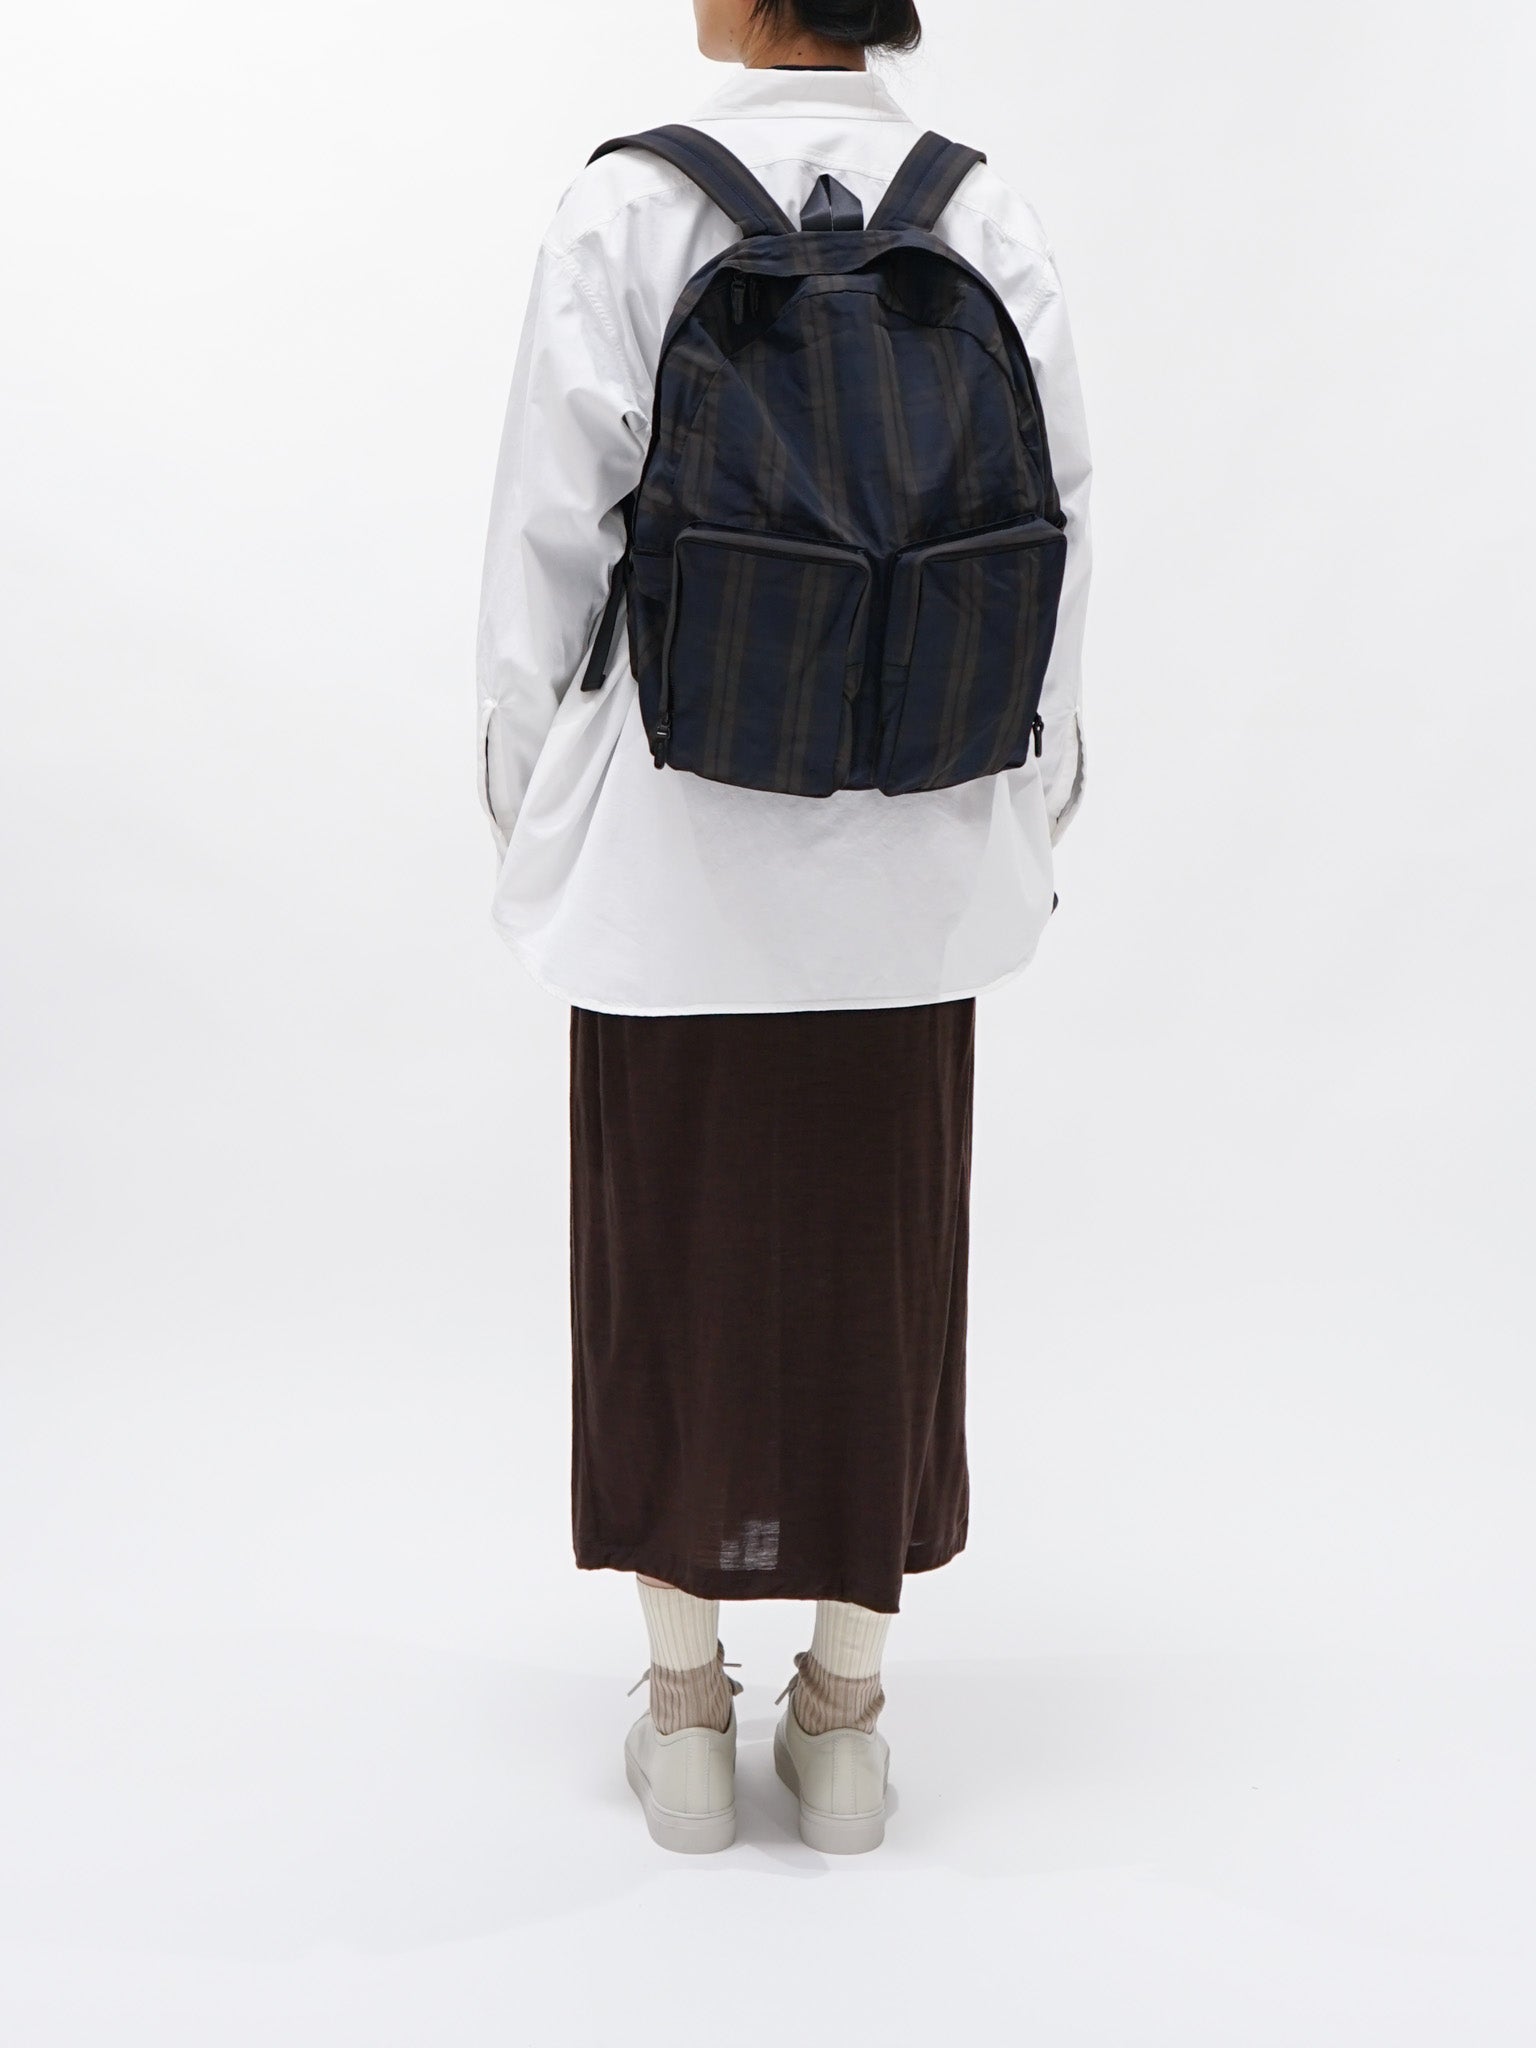 Namu Shop - Amiacalva Polyester Memory Backpack - Plaid